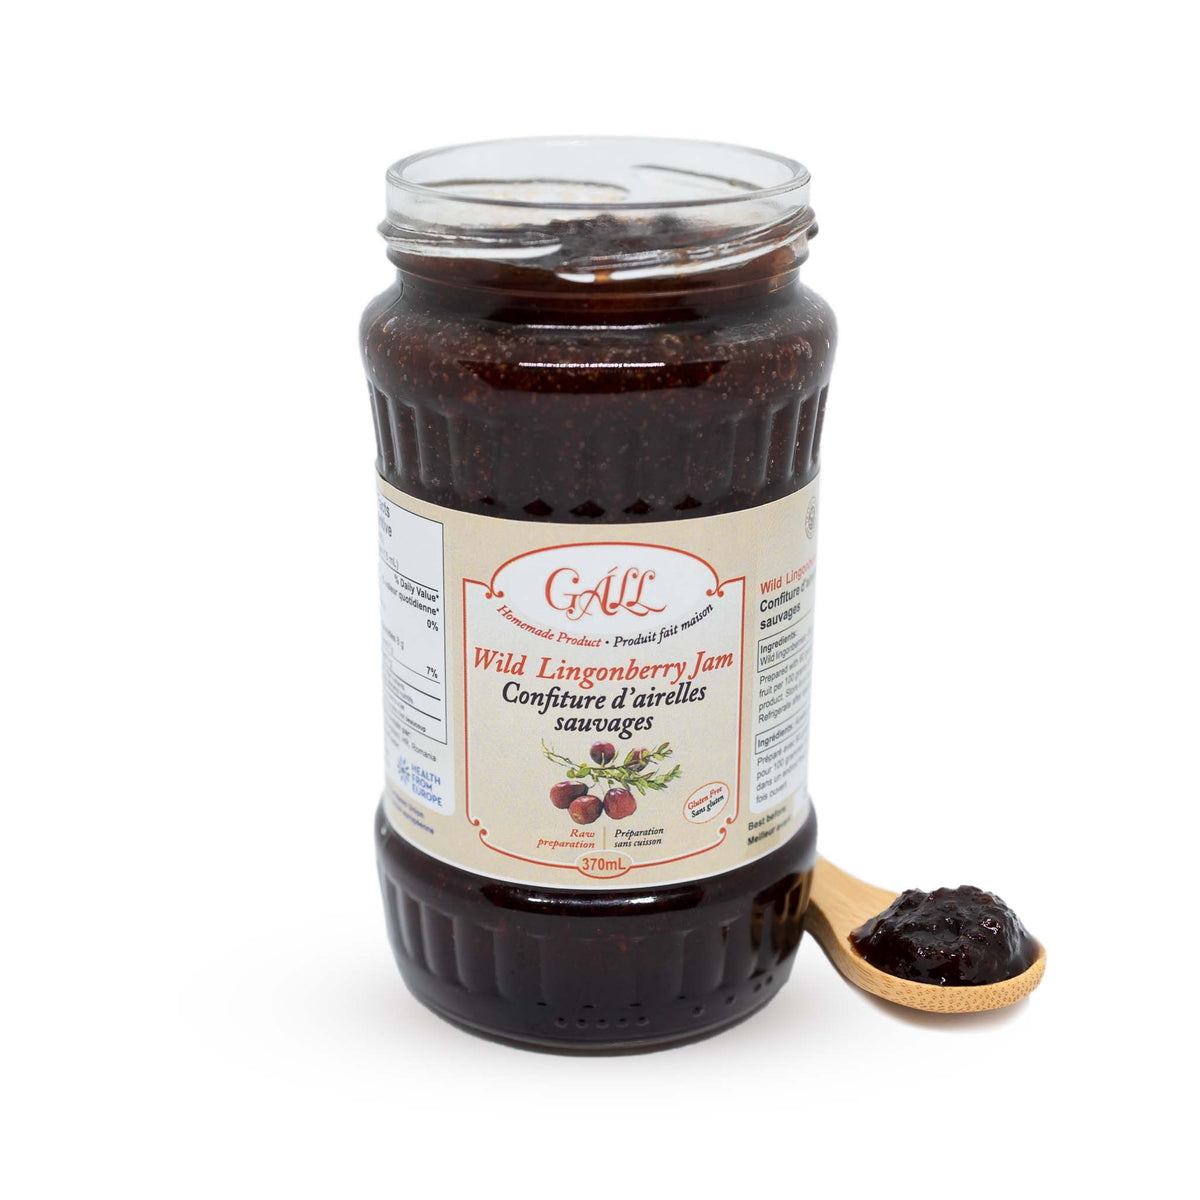 Artisanal Wild Lingonberry Jam open jar spoon Health from Europe